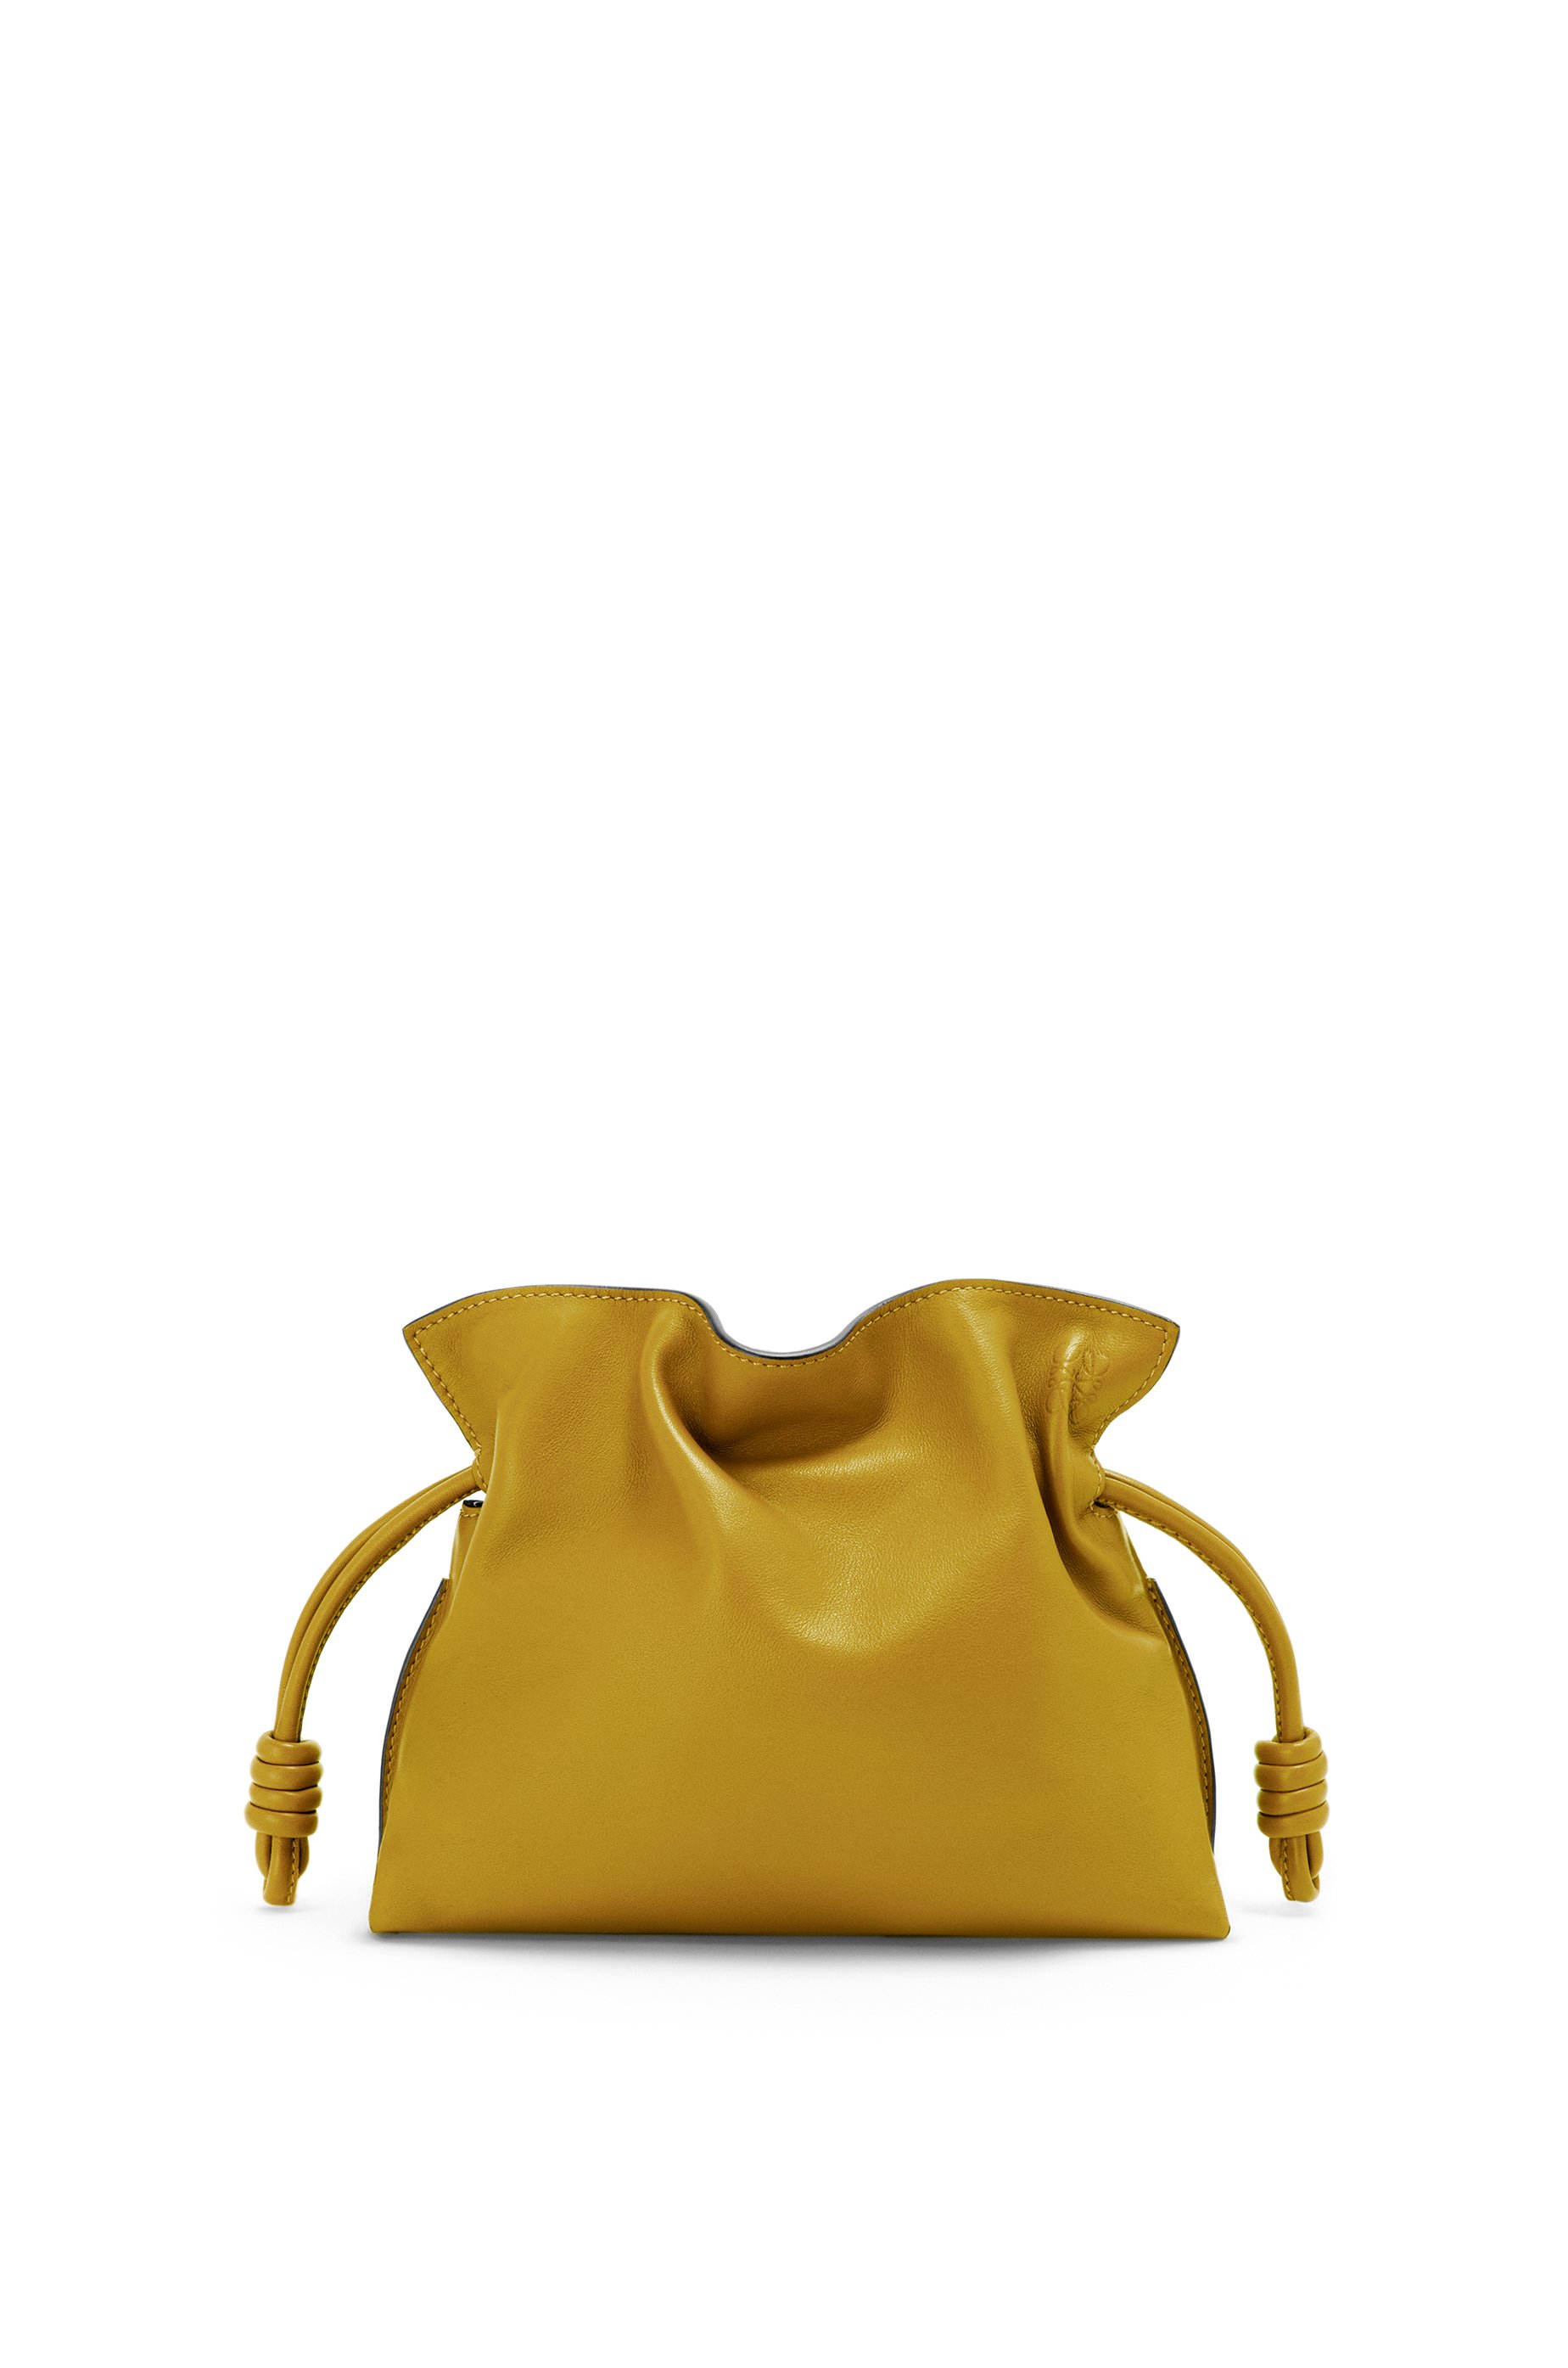 Huge leather bag Bags & Purses Handbags Hobo Bags Large shoppe bag Akathi yellow bag Yellow shoulder bag Yellow large tote Yellow leather hobo bag Yellow handbag 